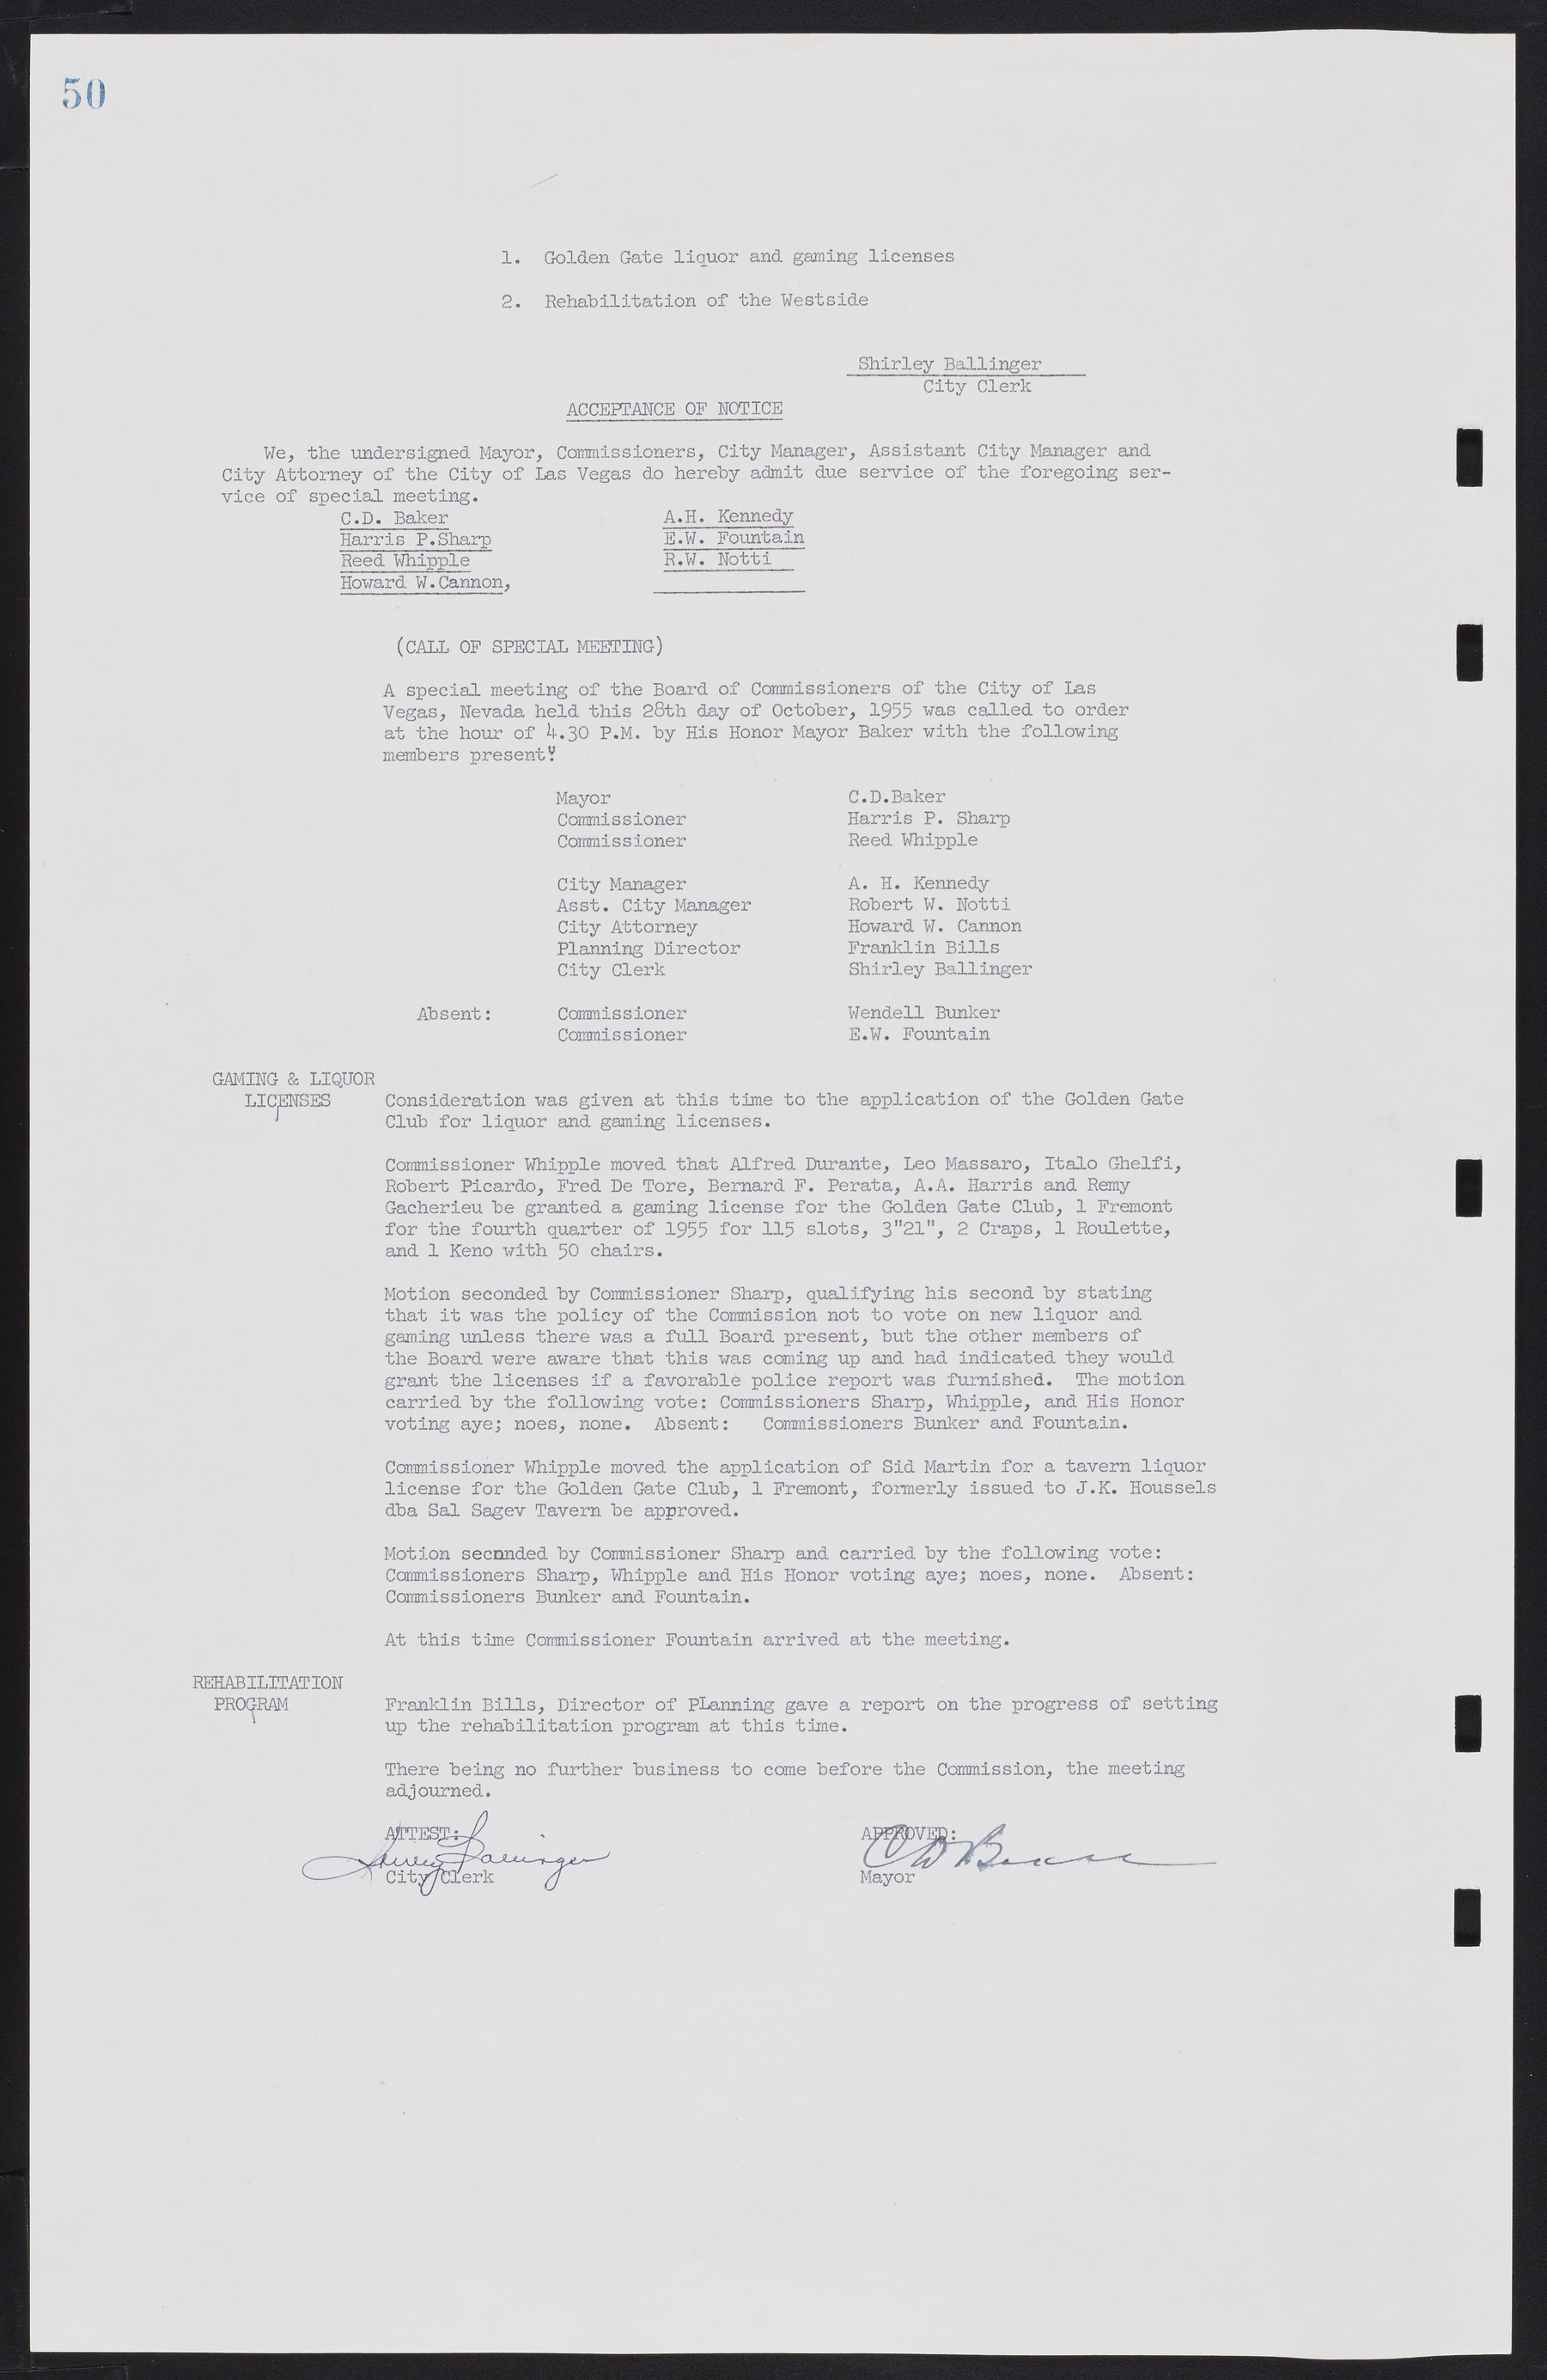 Las Vegas City Commission Minutes, September 21, 1955 to November 20, 1957, lvc000010-56